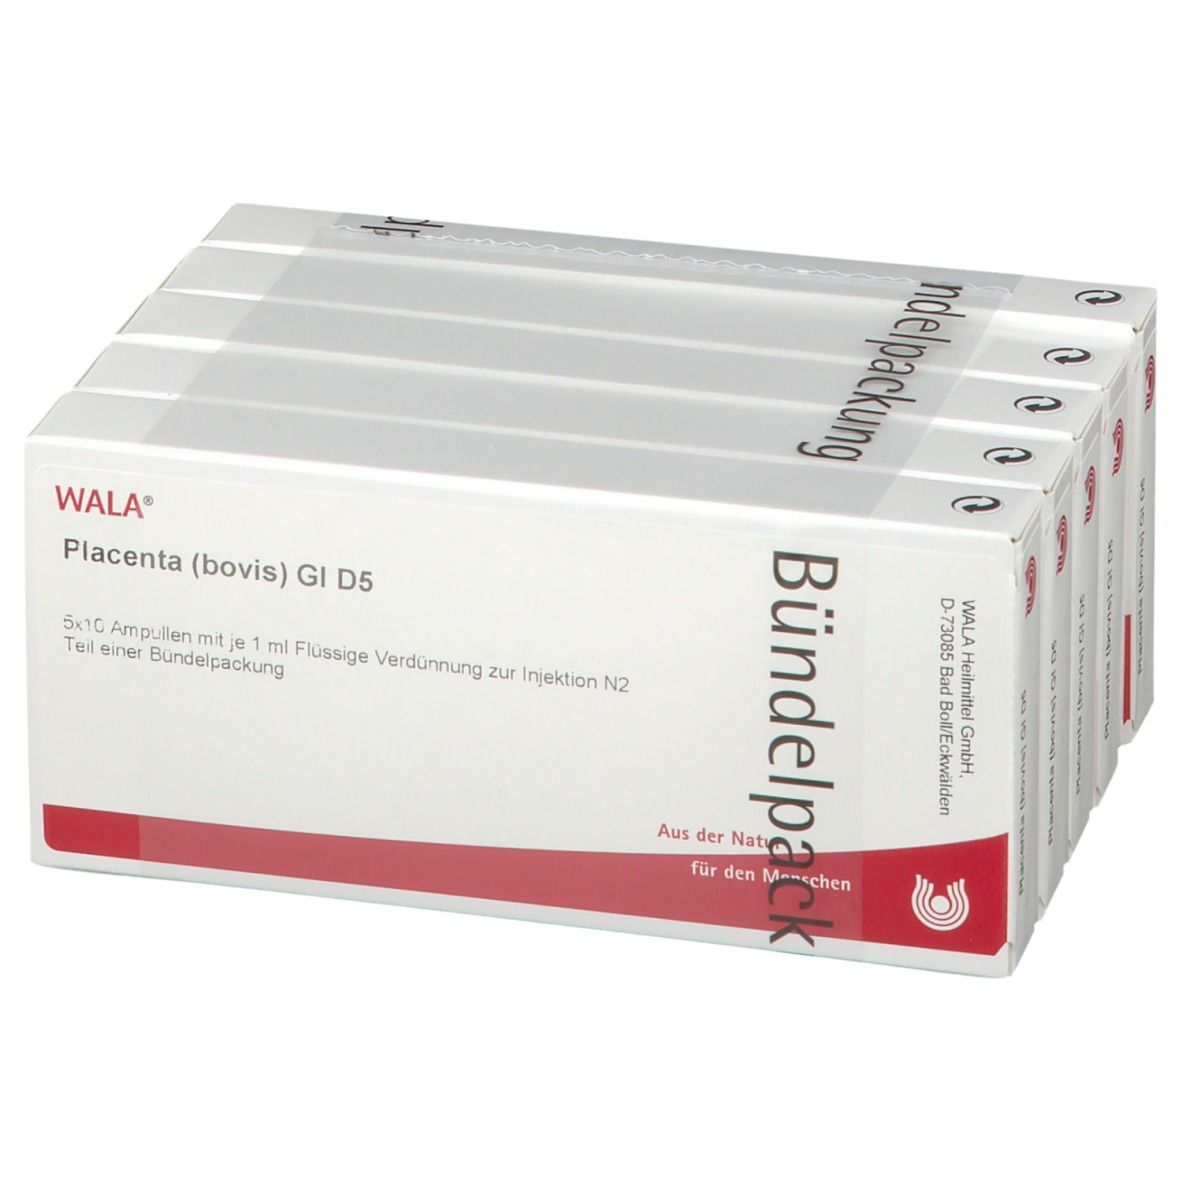 WALA® Placenta bovis Gl D 5